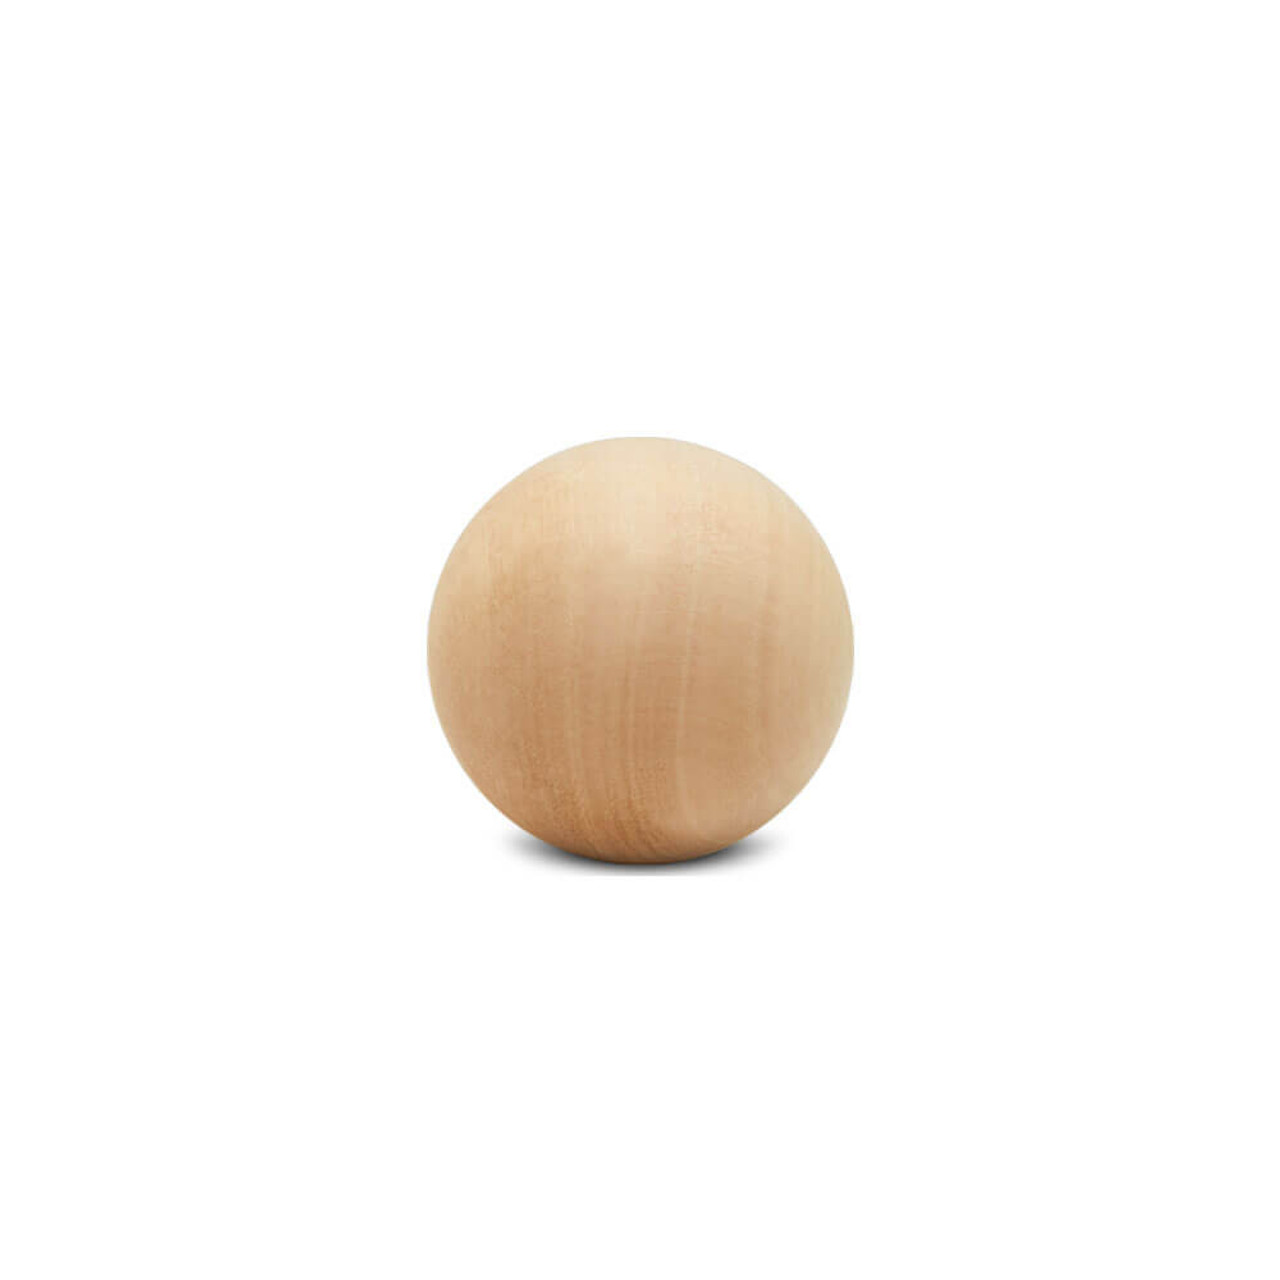 Wooden Ball 1 1 Inch Solid Wood, 1 Inch Diameter Balls Set of 6 